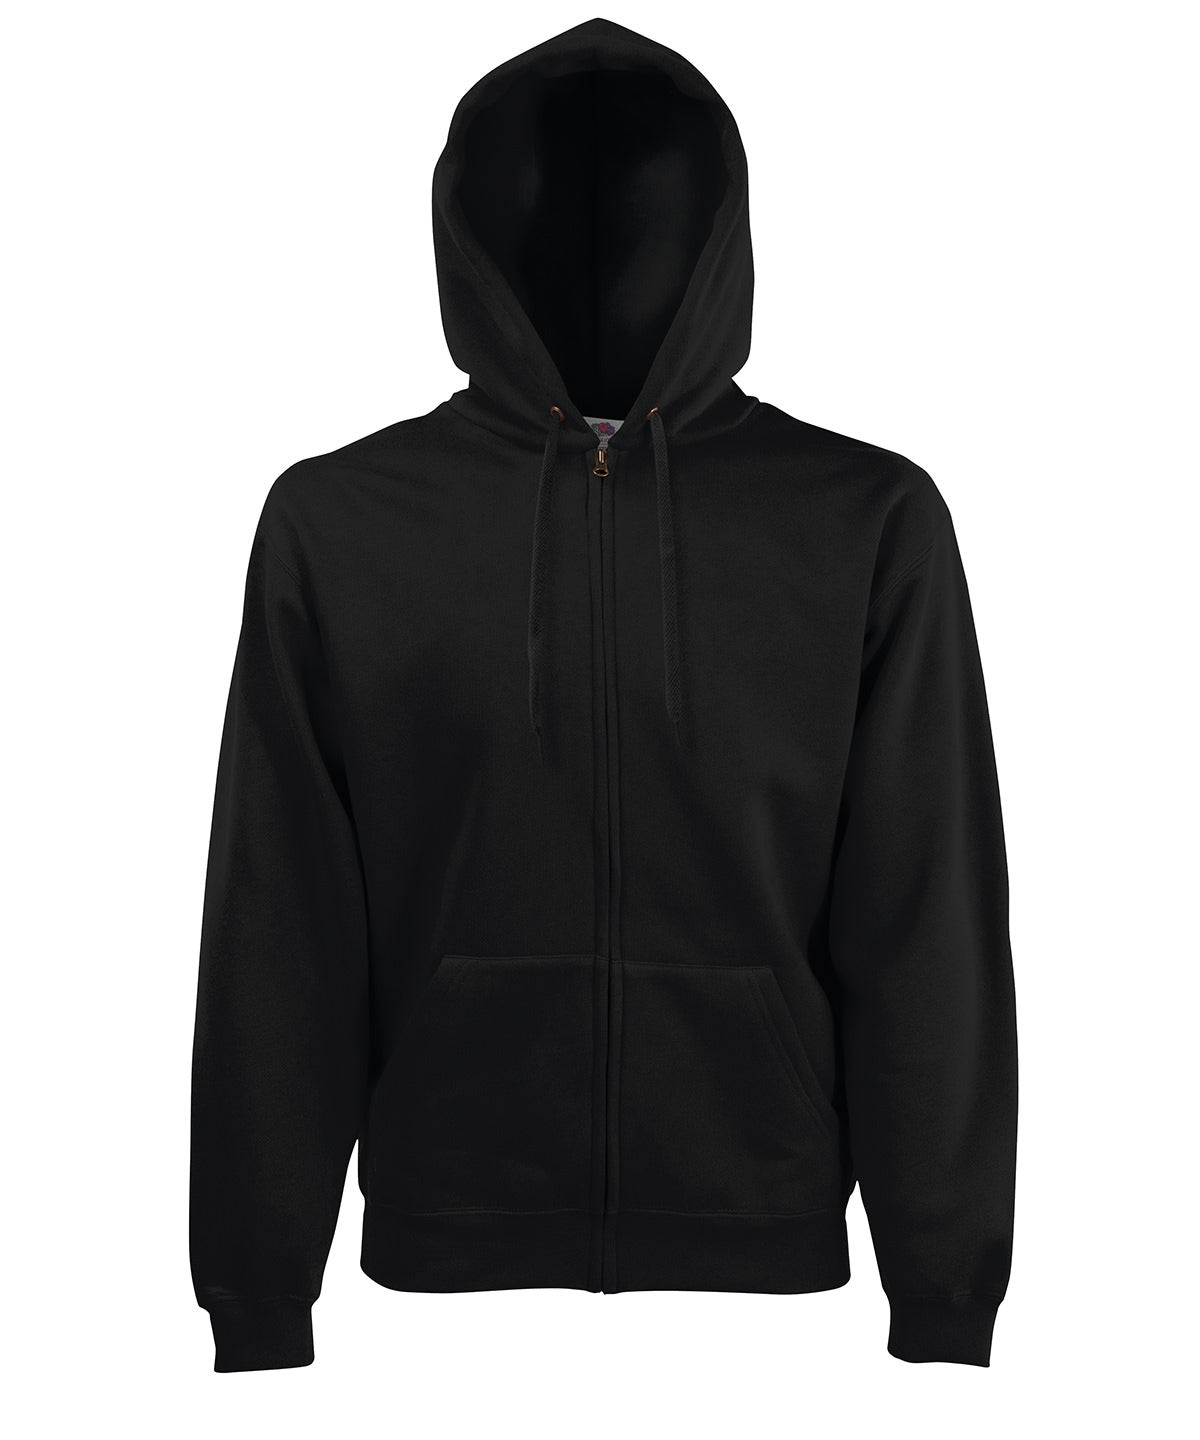 Premium 70/30 hooded sweatshirt jacket | Black